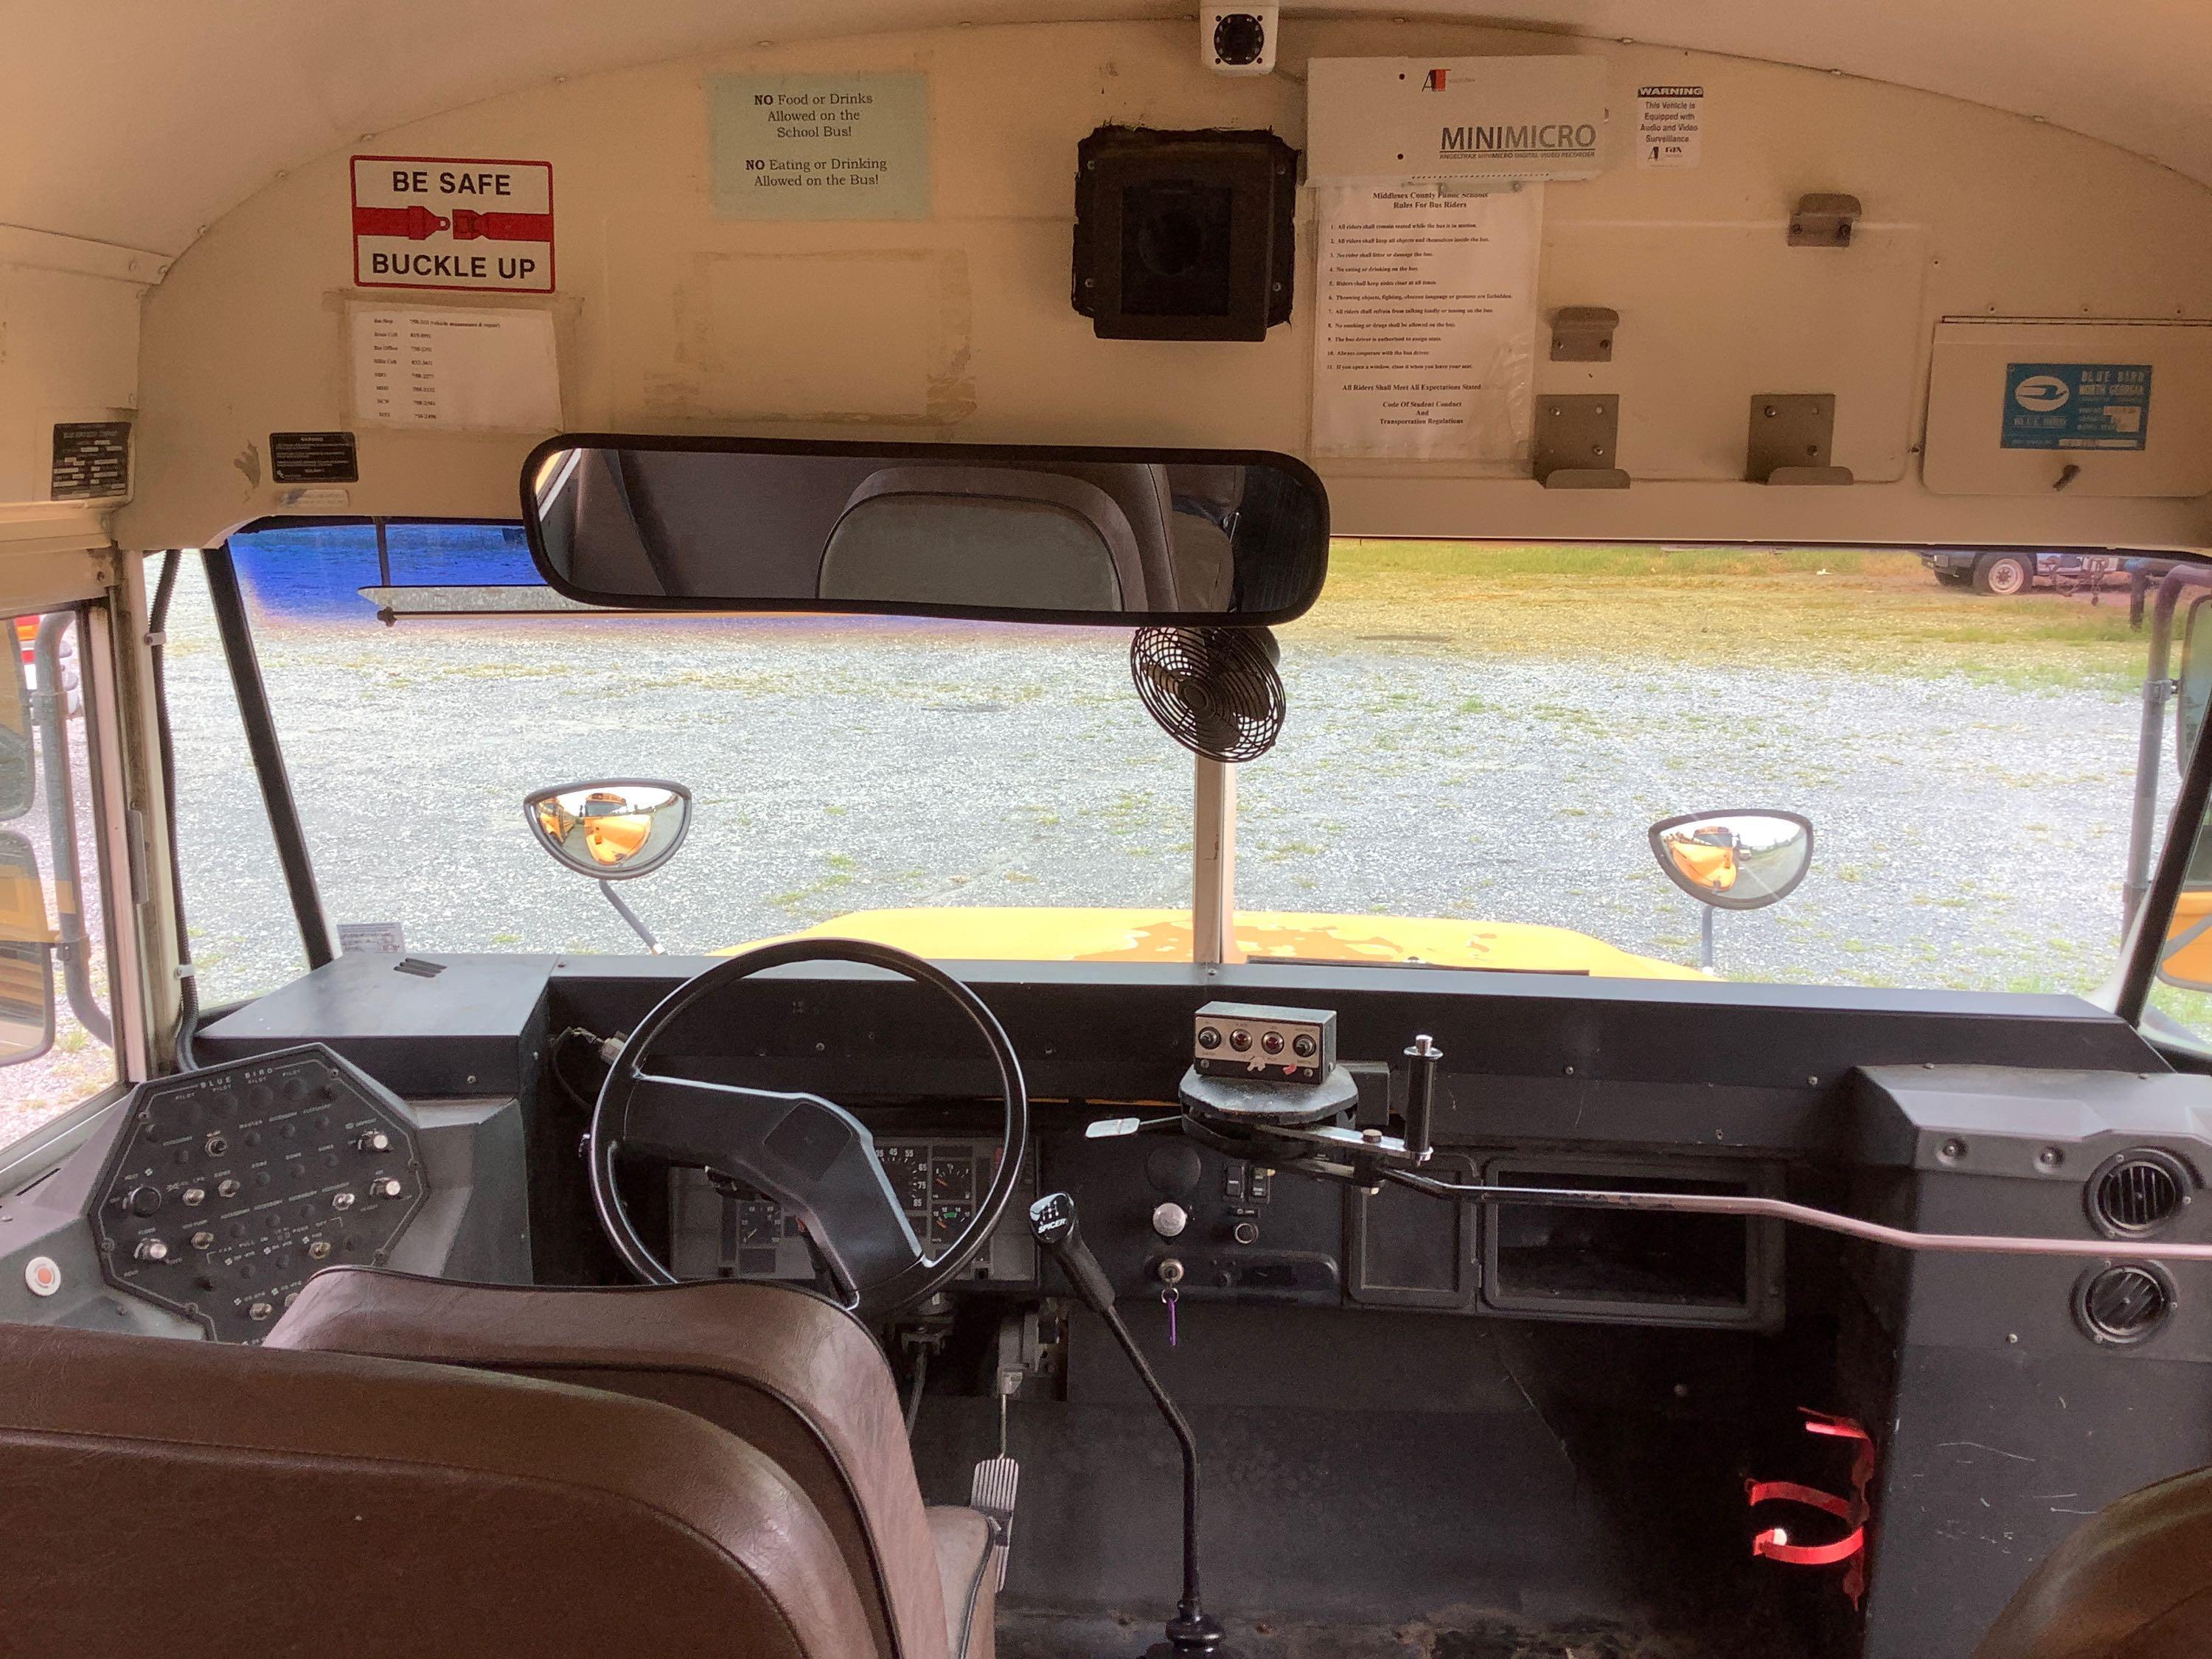 1996 International Bluebird 3800 School Bus (County of Middlesex Unit #31)